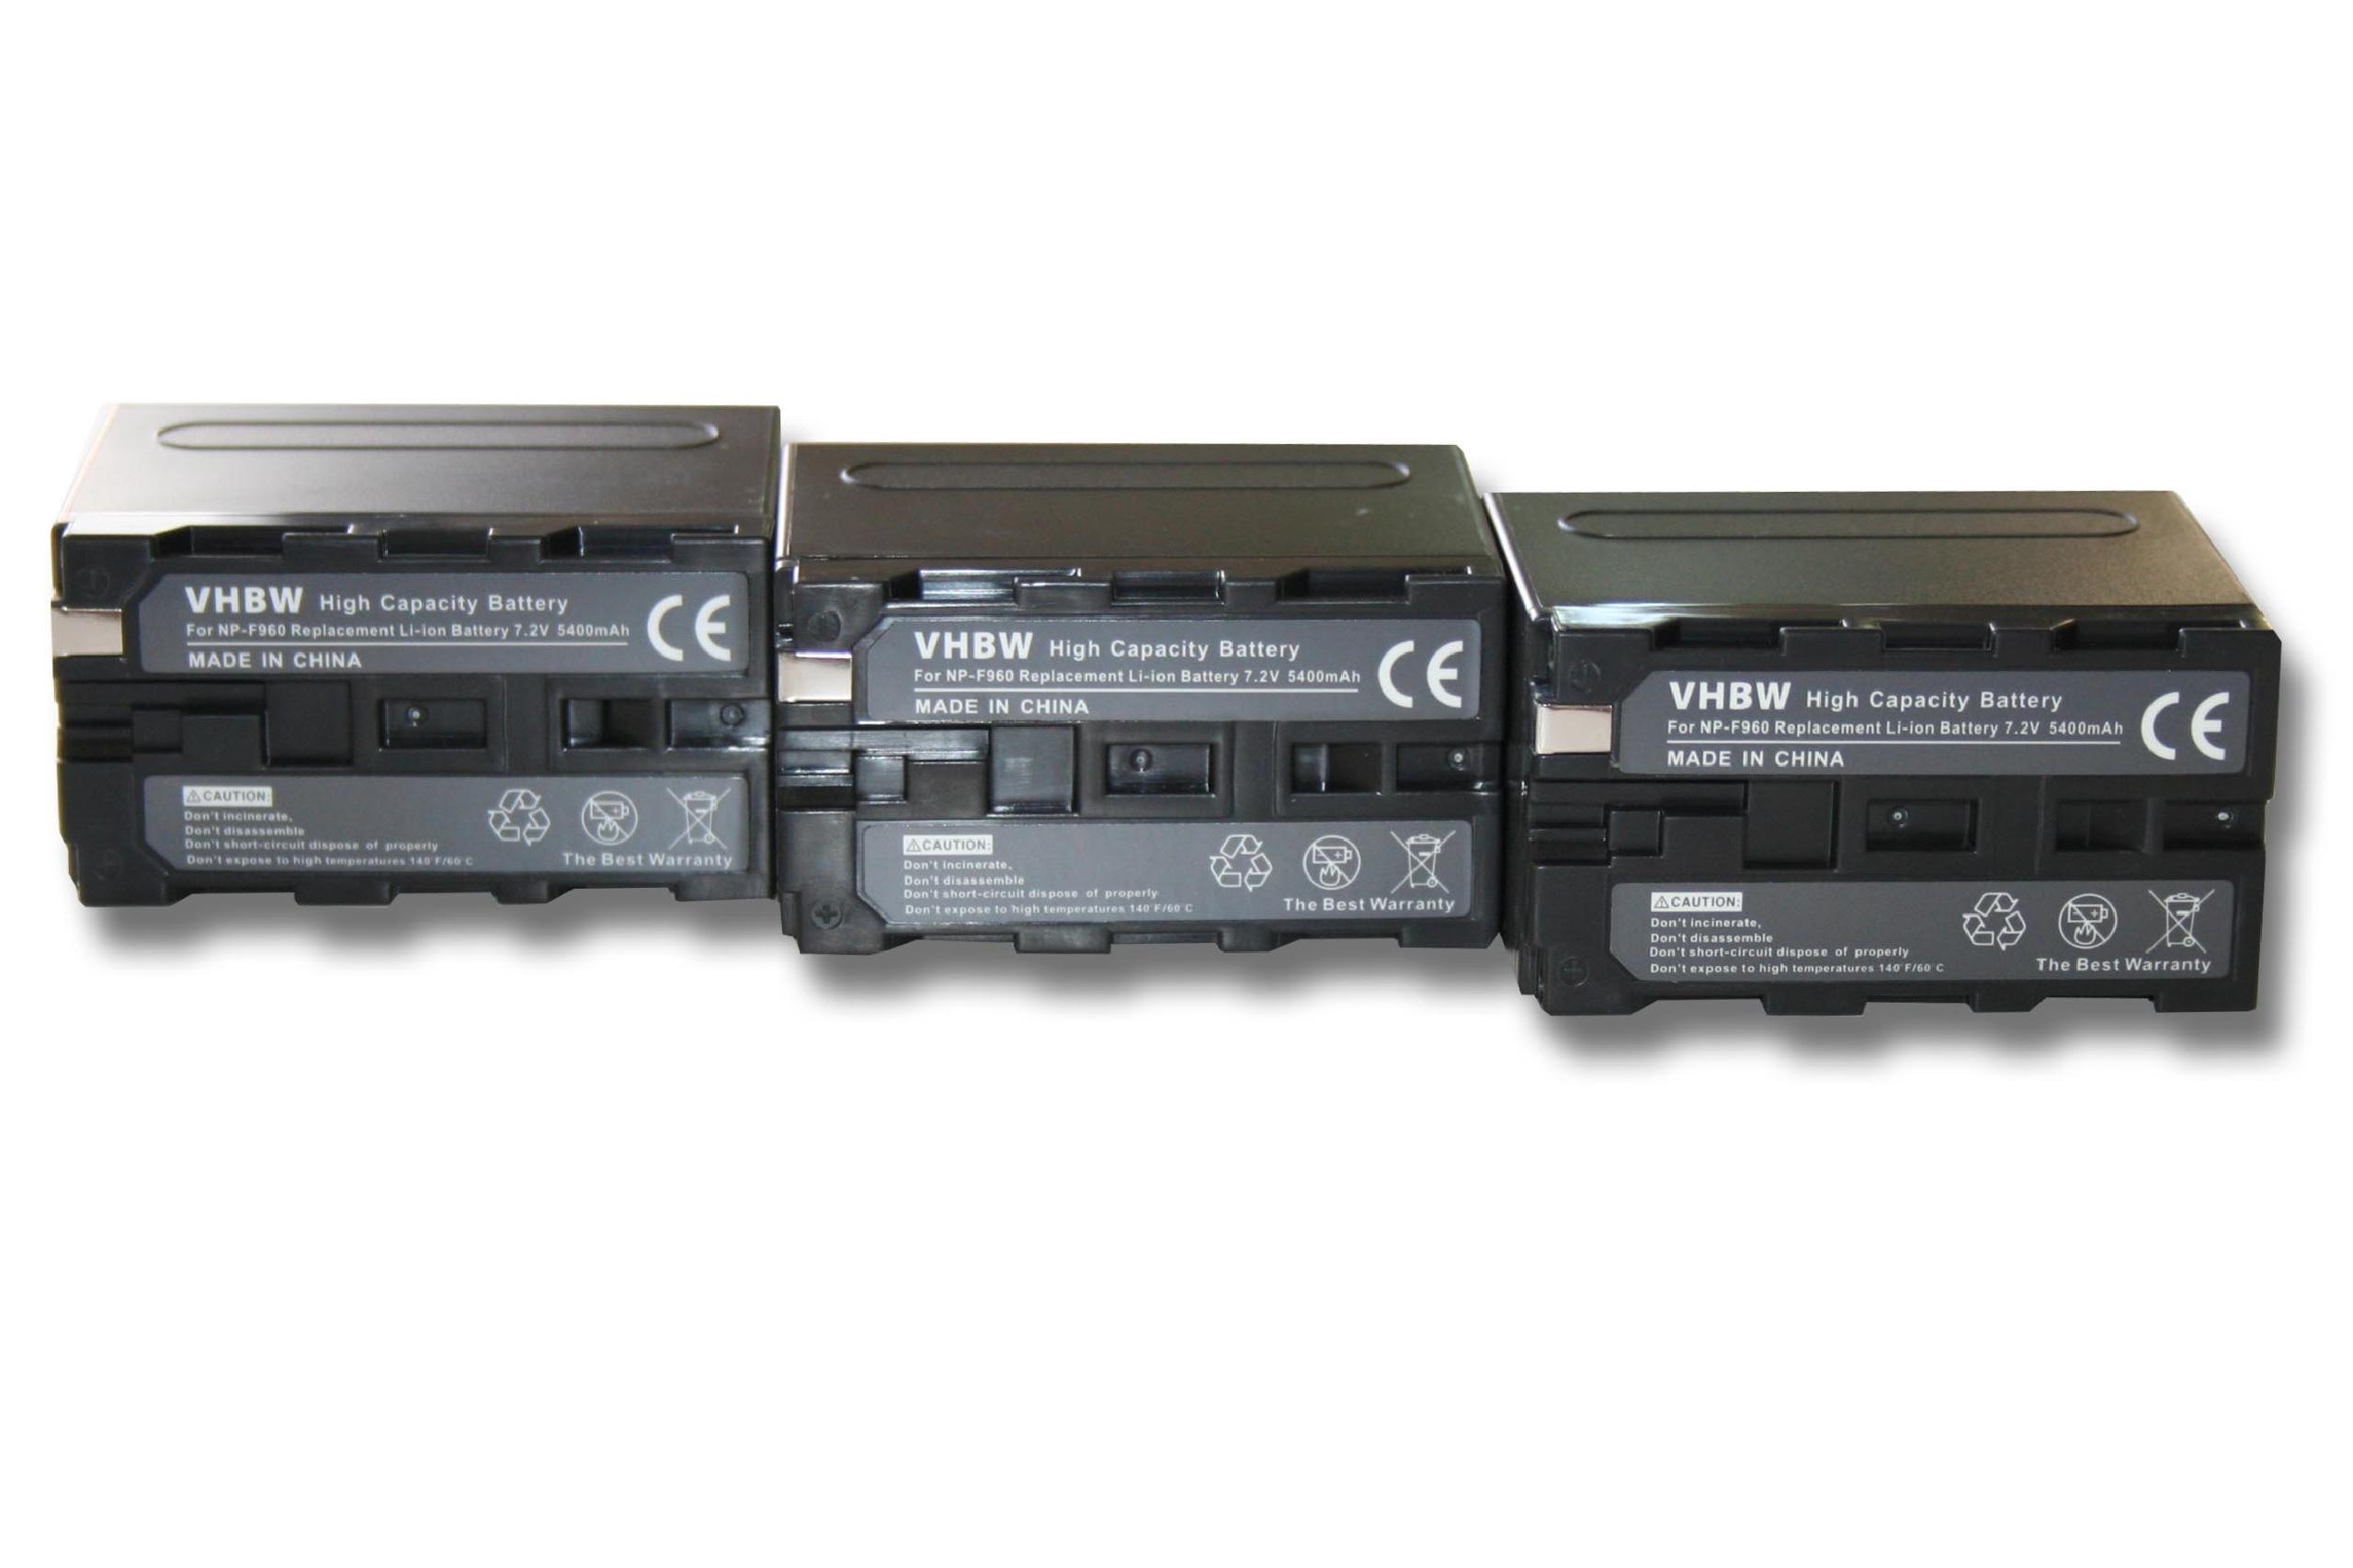 VHBW kompatibel mit Sony DSR-300, 7.2 DSR-PD100A, GV-A500E, 6000 Li-Ion - Videokamera, Akku DSR-200 GV-A500, DSC-D770, GV-D200, Volt